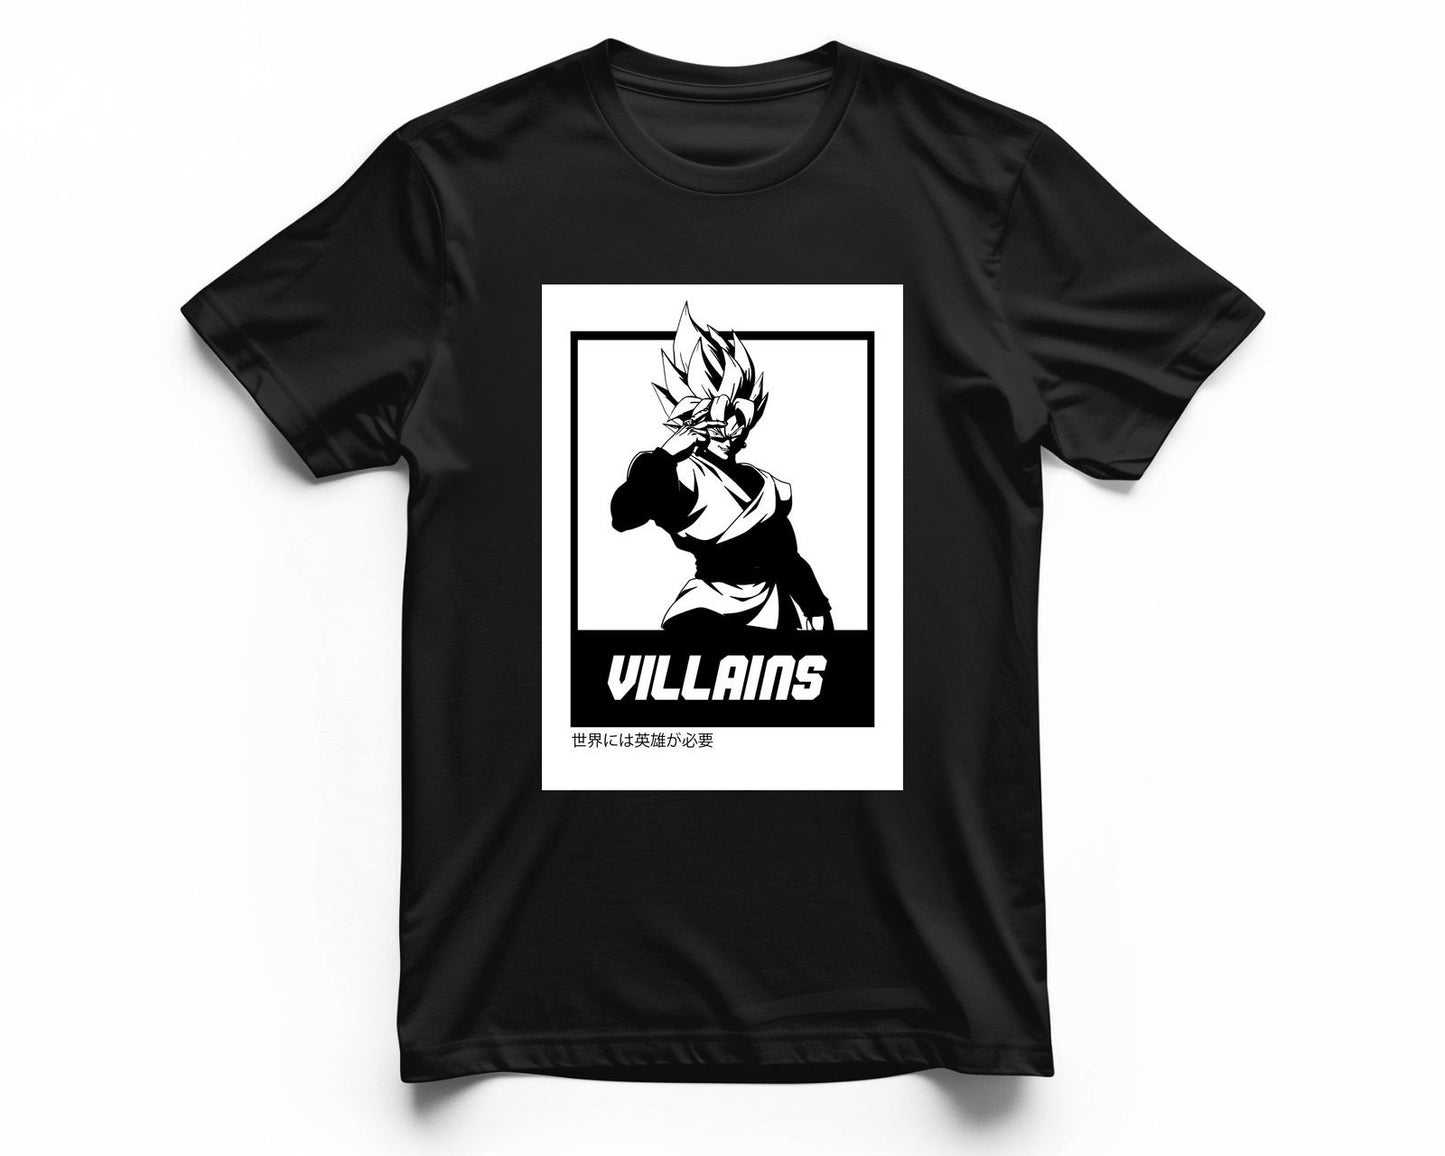 Villains 4 - @FreakCreator